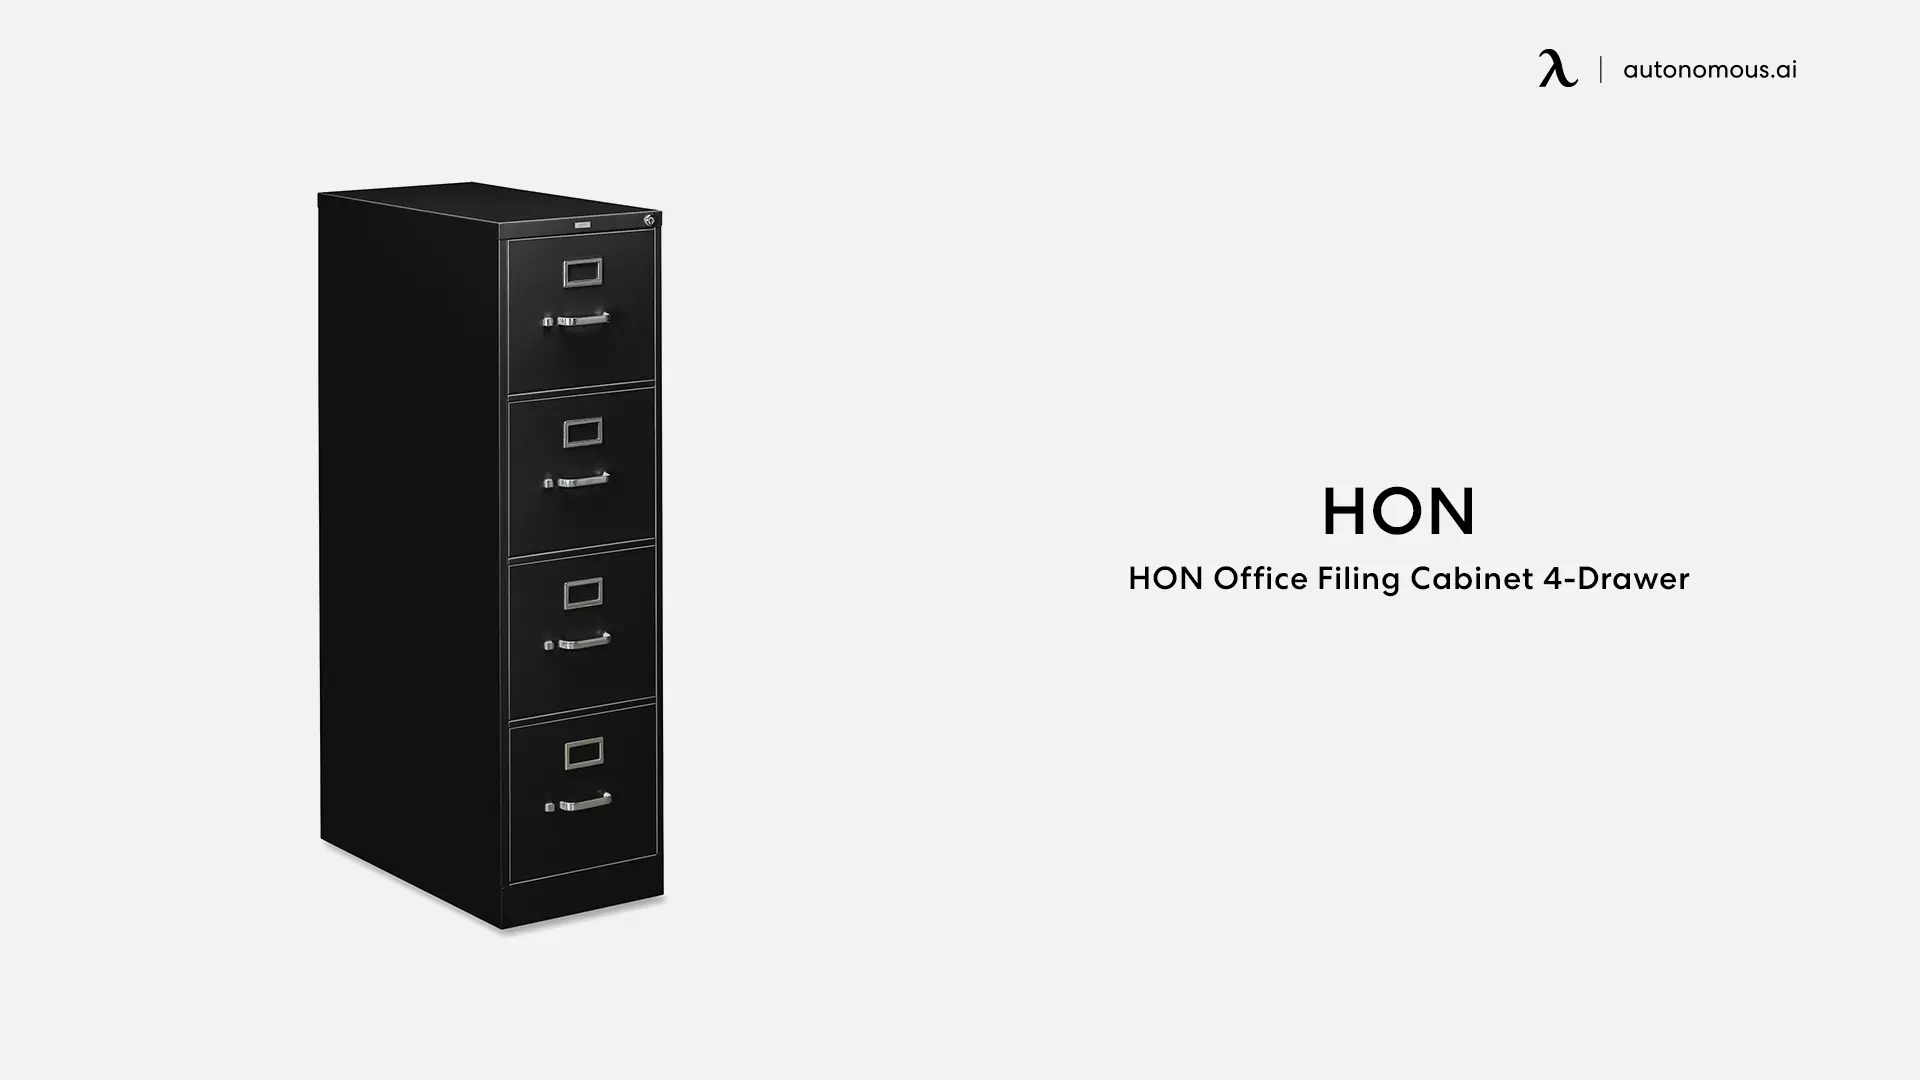 HON Office Filing Cabinet 4-Drawer